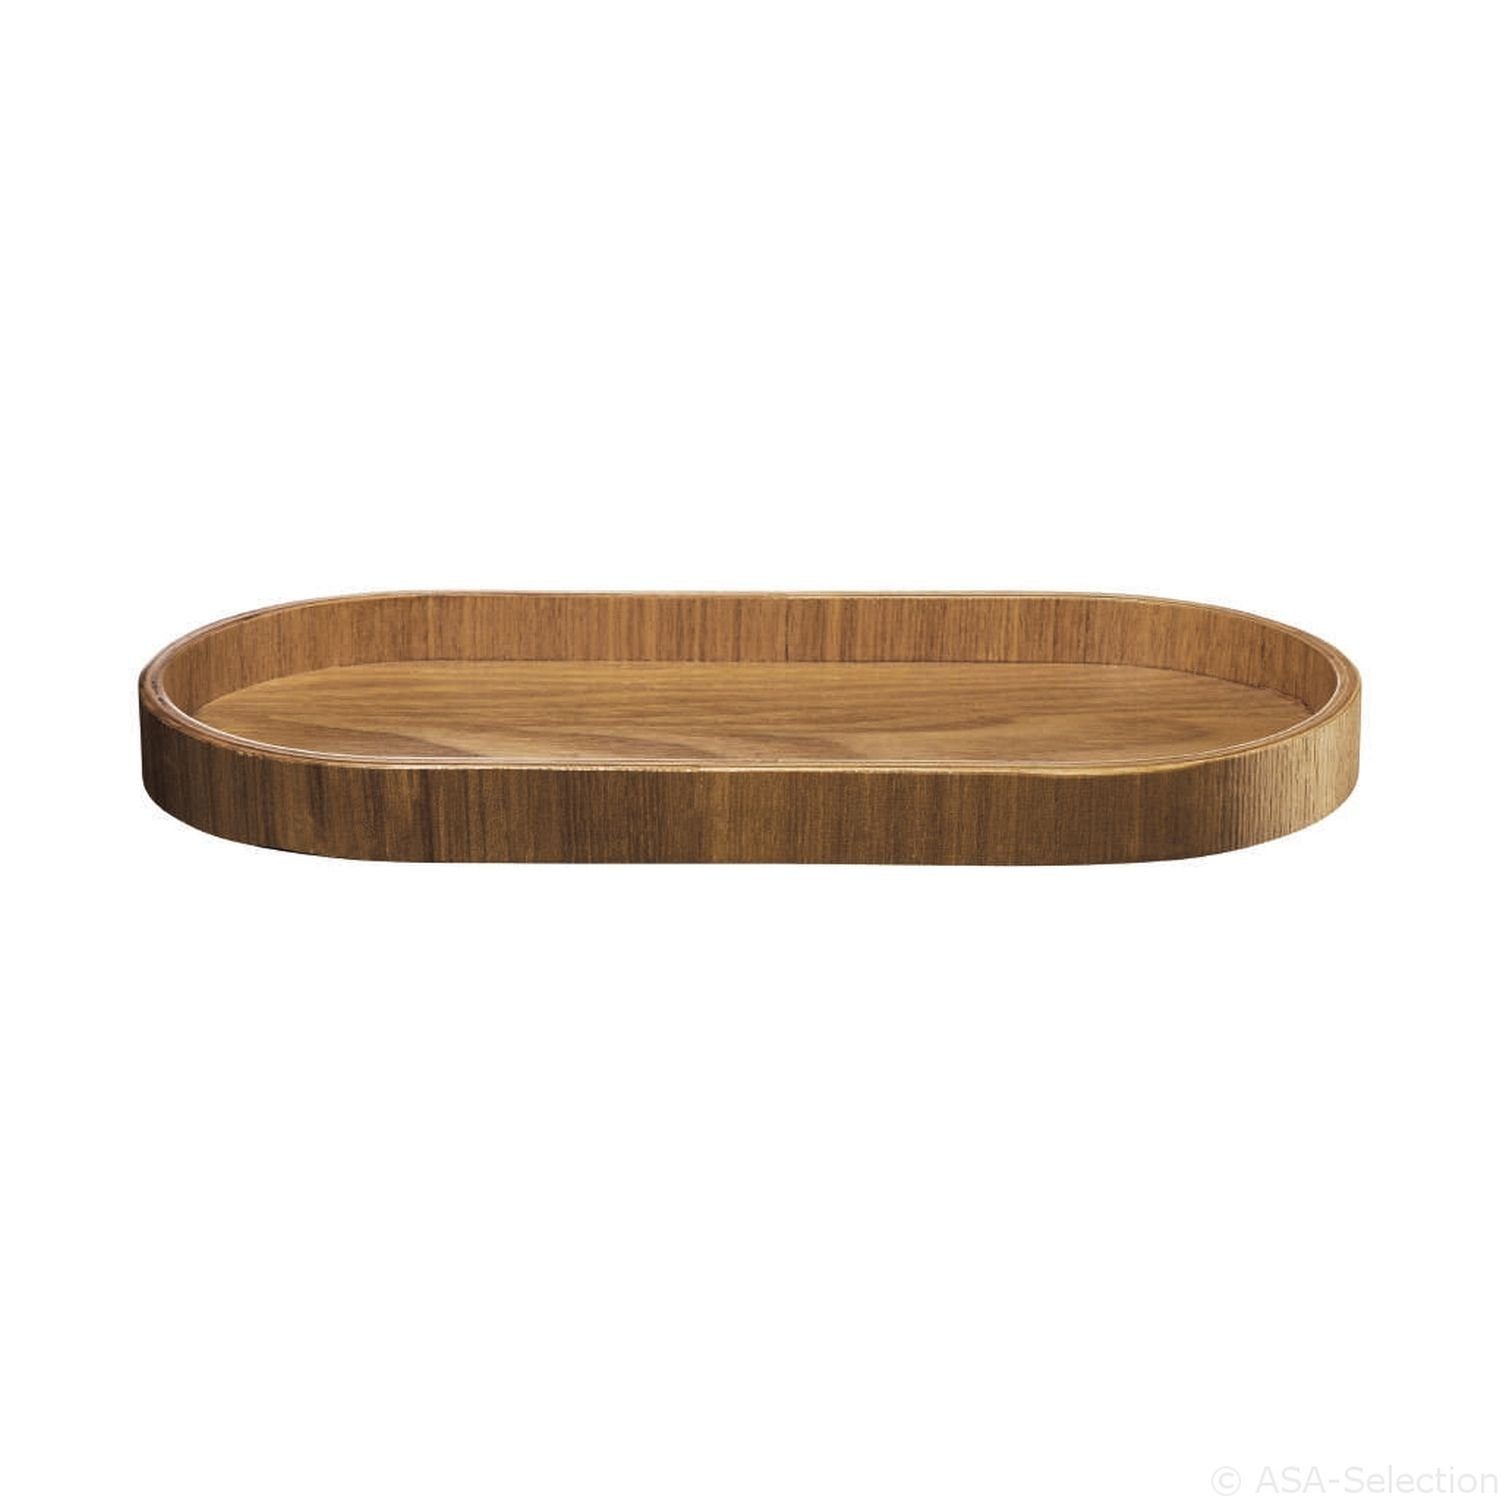 ASA SELECTION Tablett Wood Oval 35,5 cm, Weidenholz